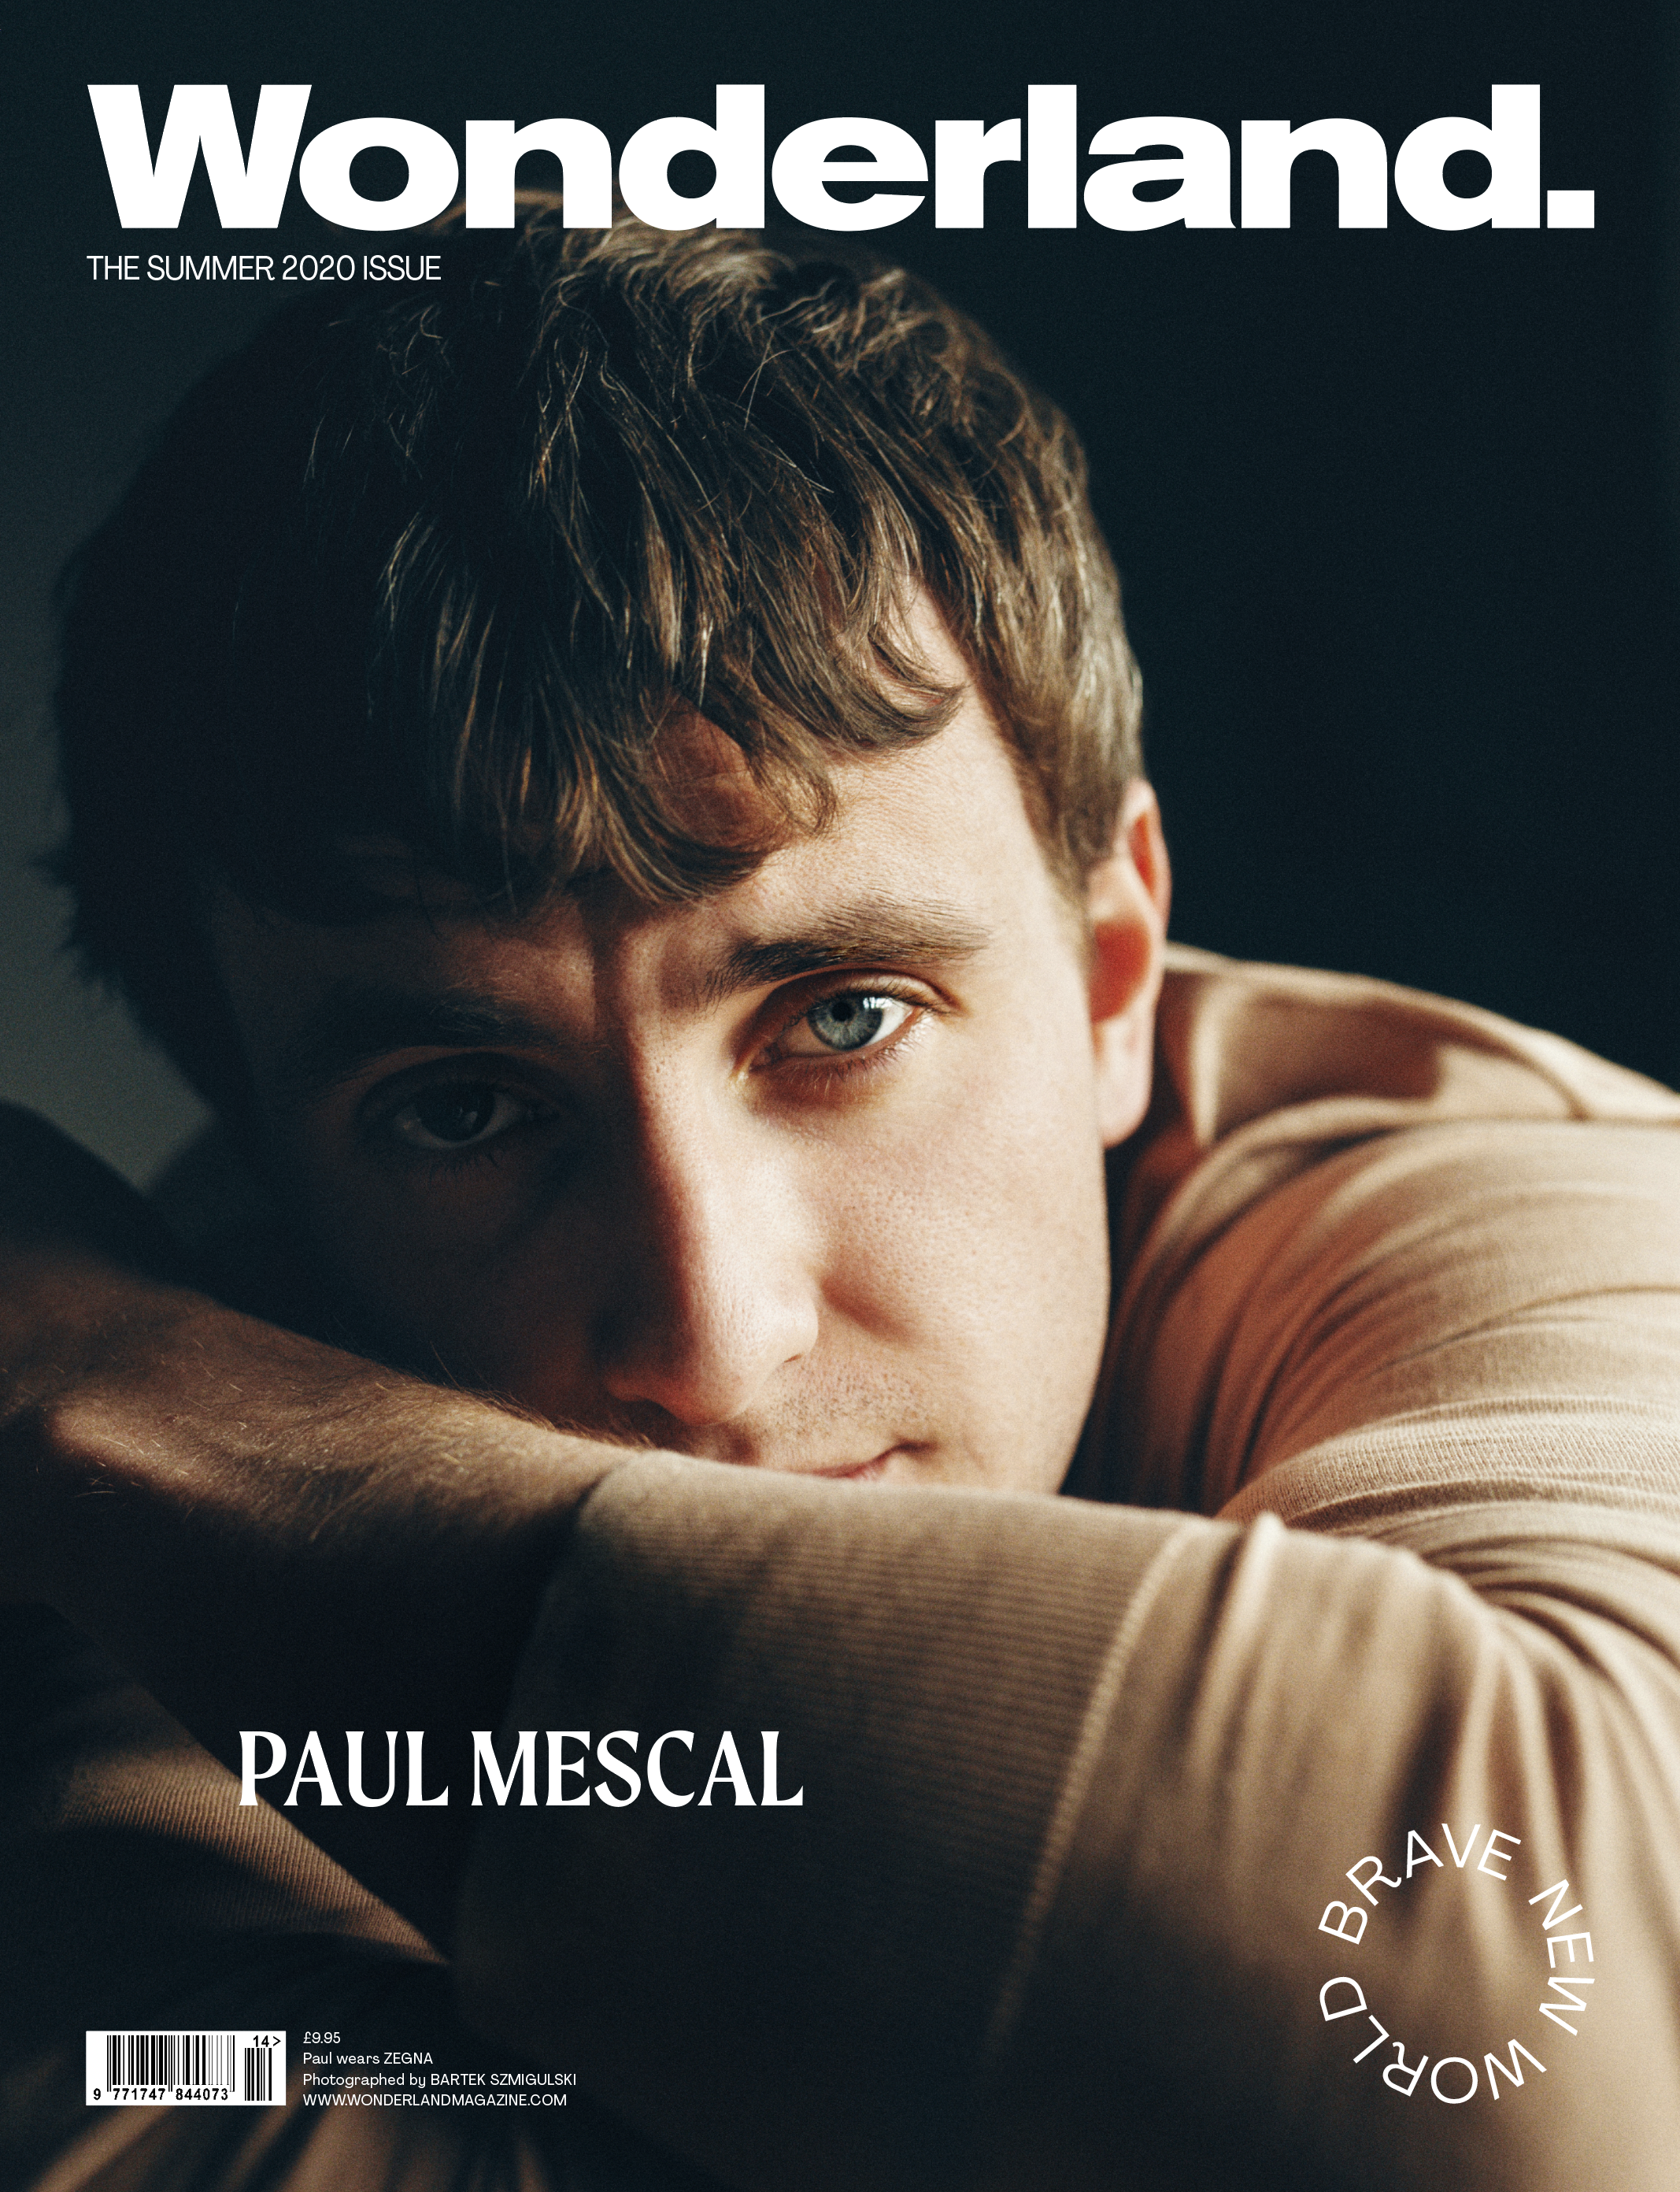 Paul Mescal